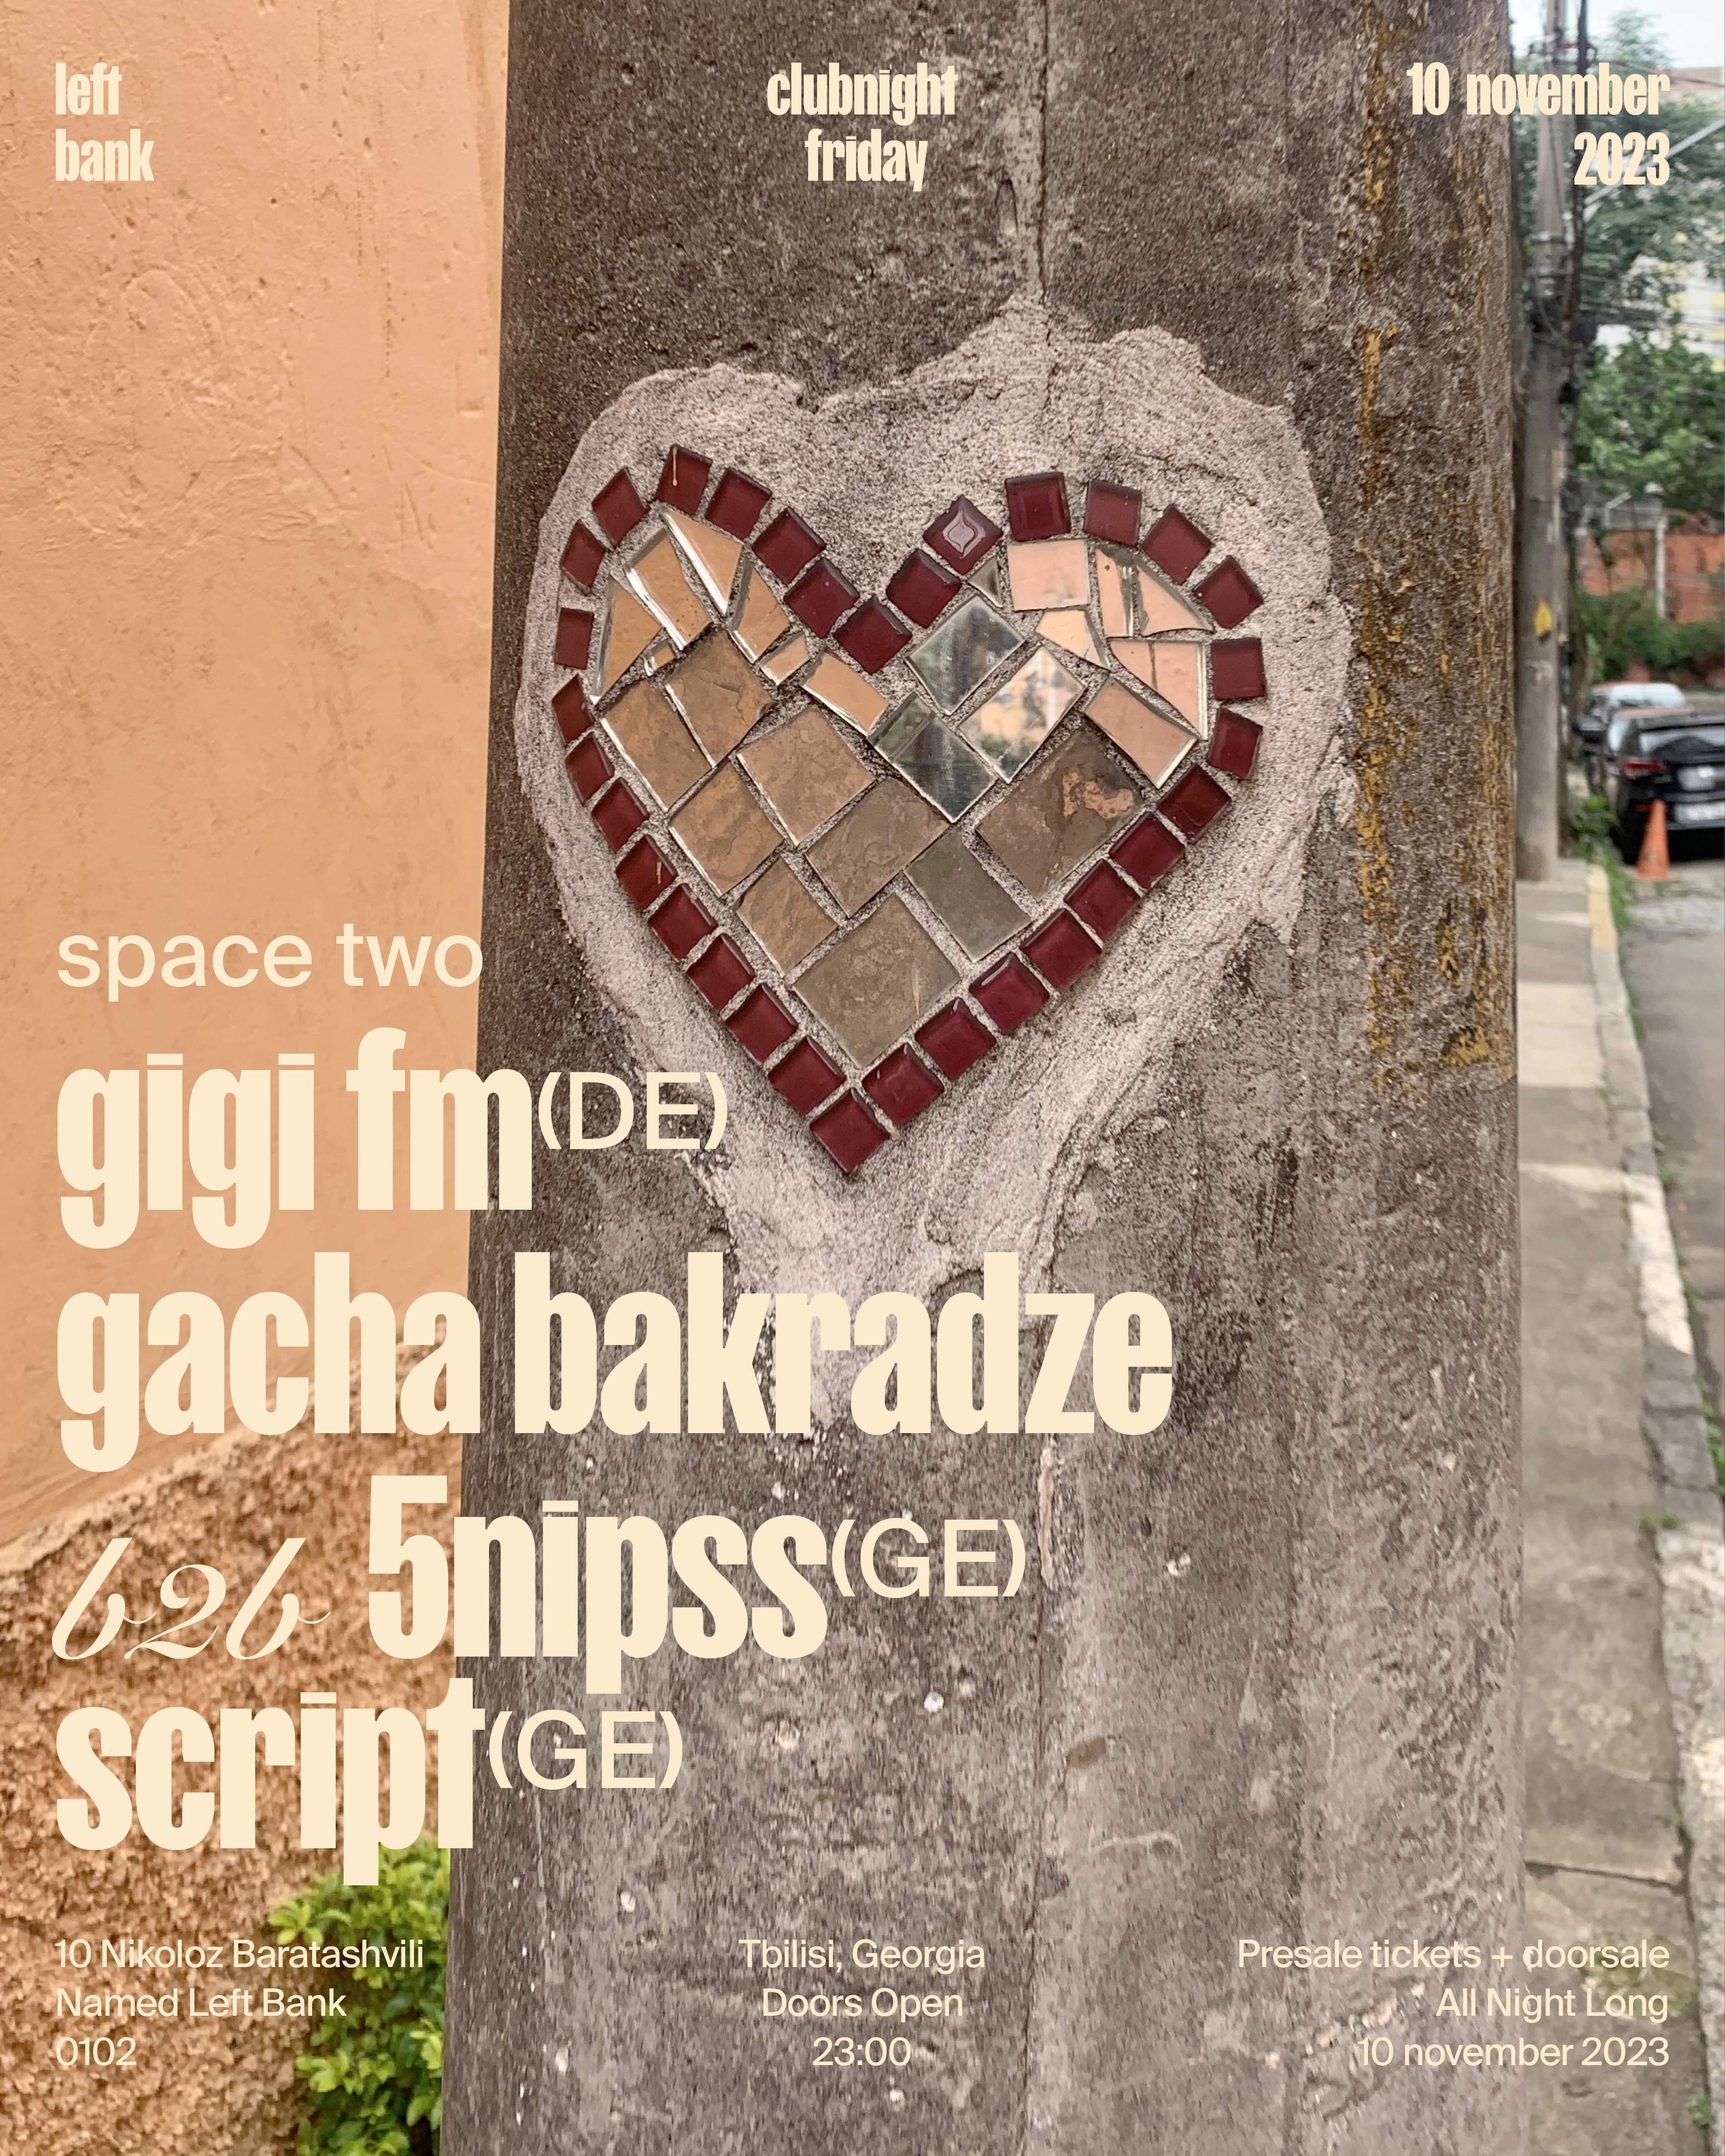 Left Bank Clubnight: GiGi FM ✦ Gacha Bakradze b2b 5nipss ✦ Script - フライヤー表